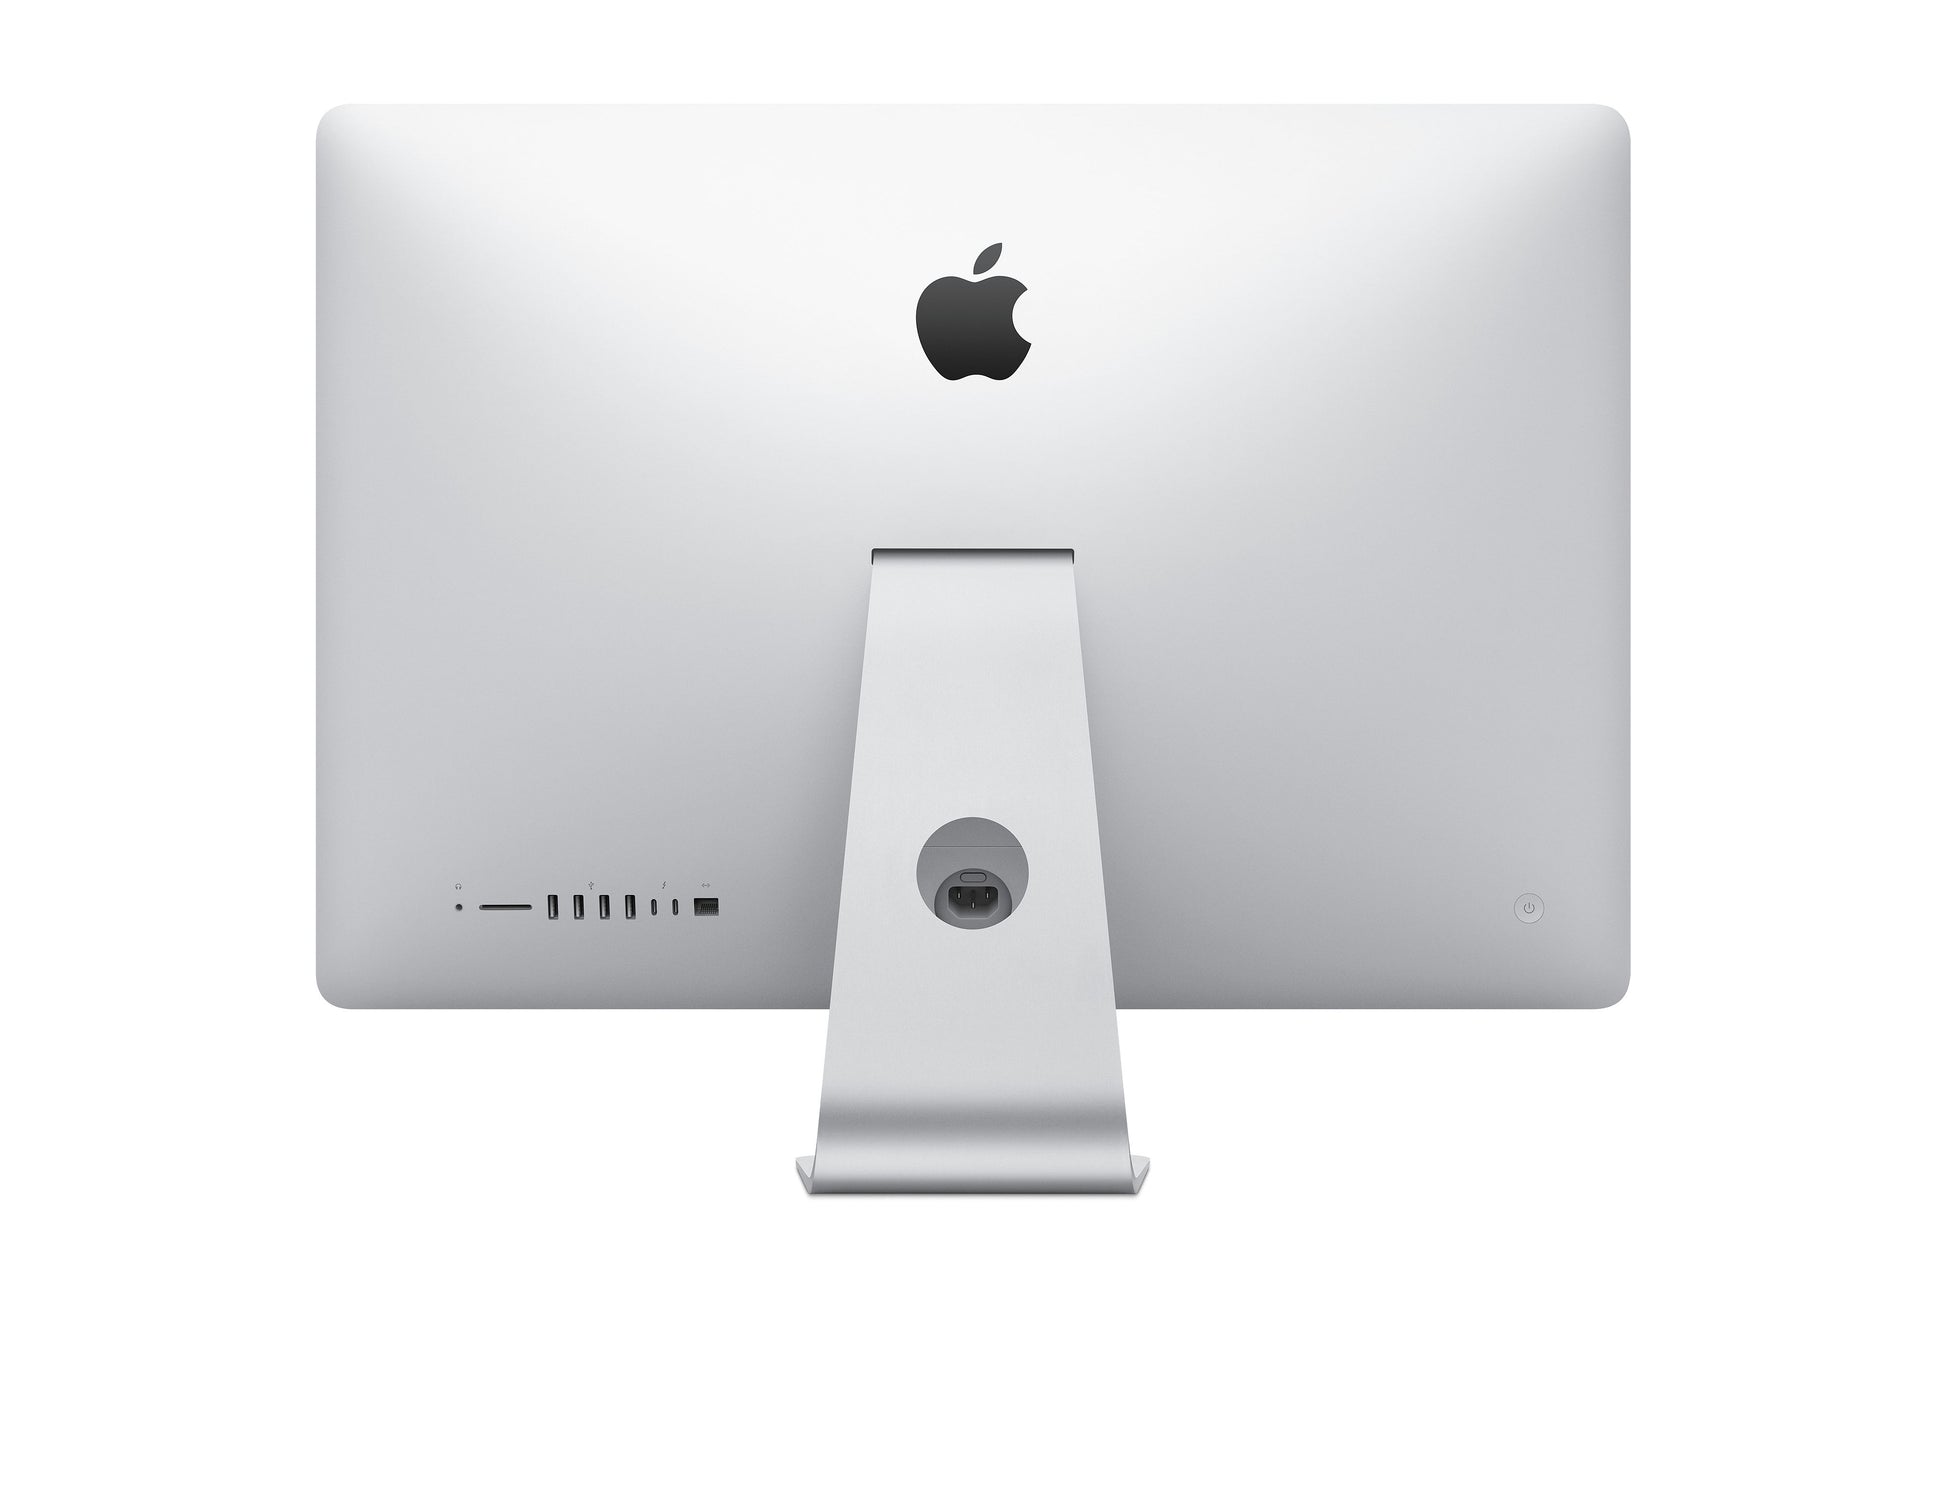 Apple iMac 5K 27-inch (Mid 2019) 3.7GHz i5 4TB SSD 64GB RAM All-In-One Desktop